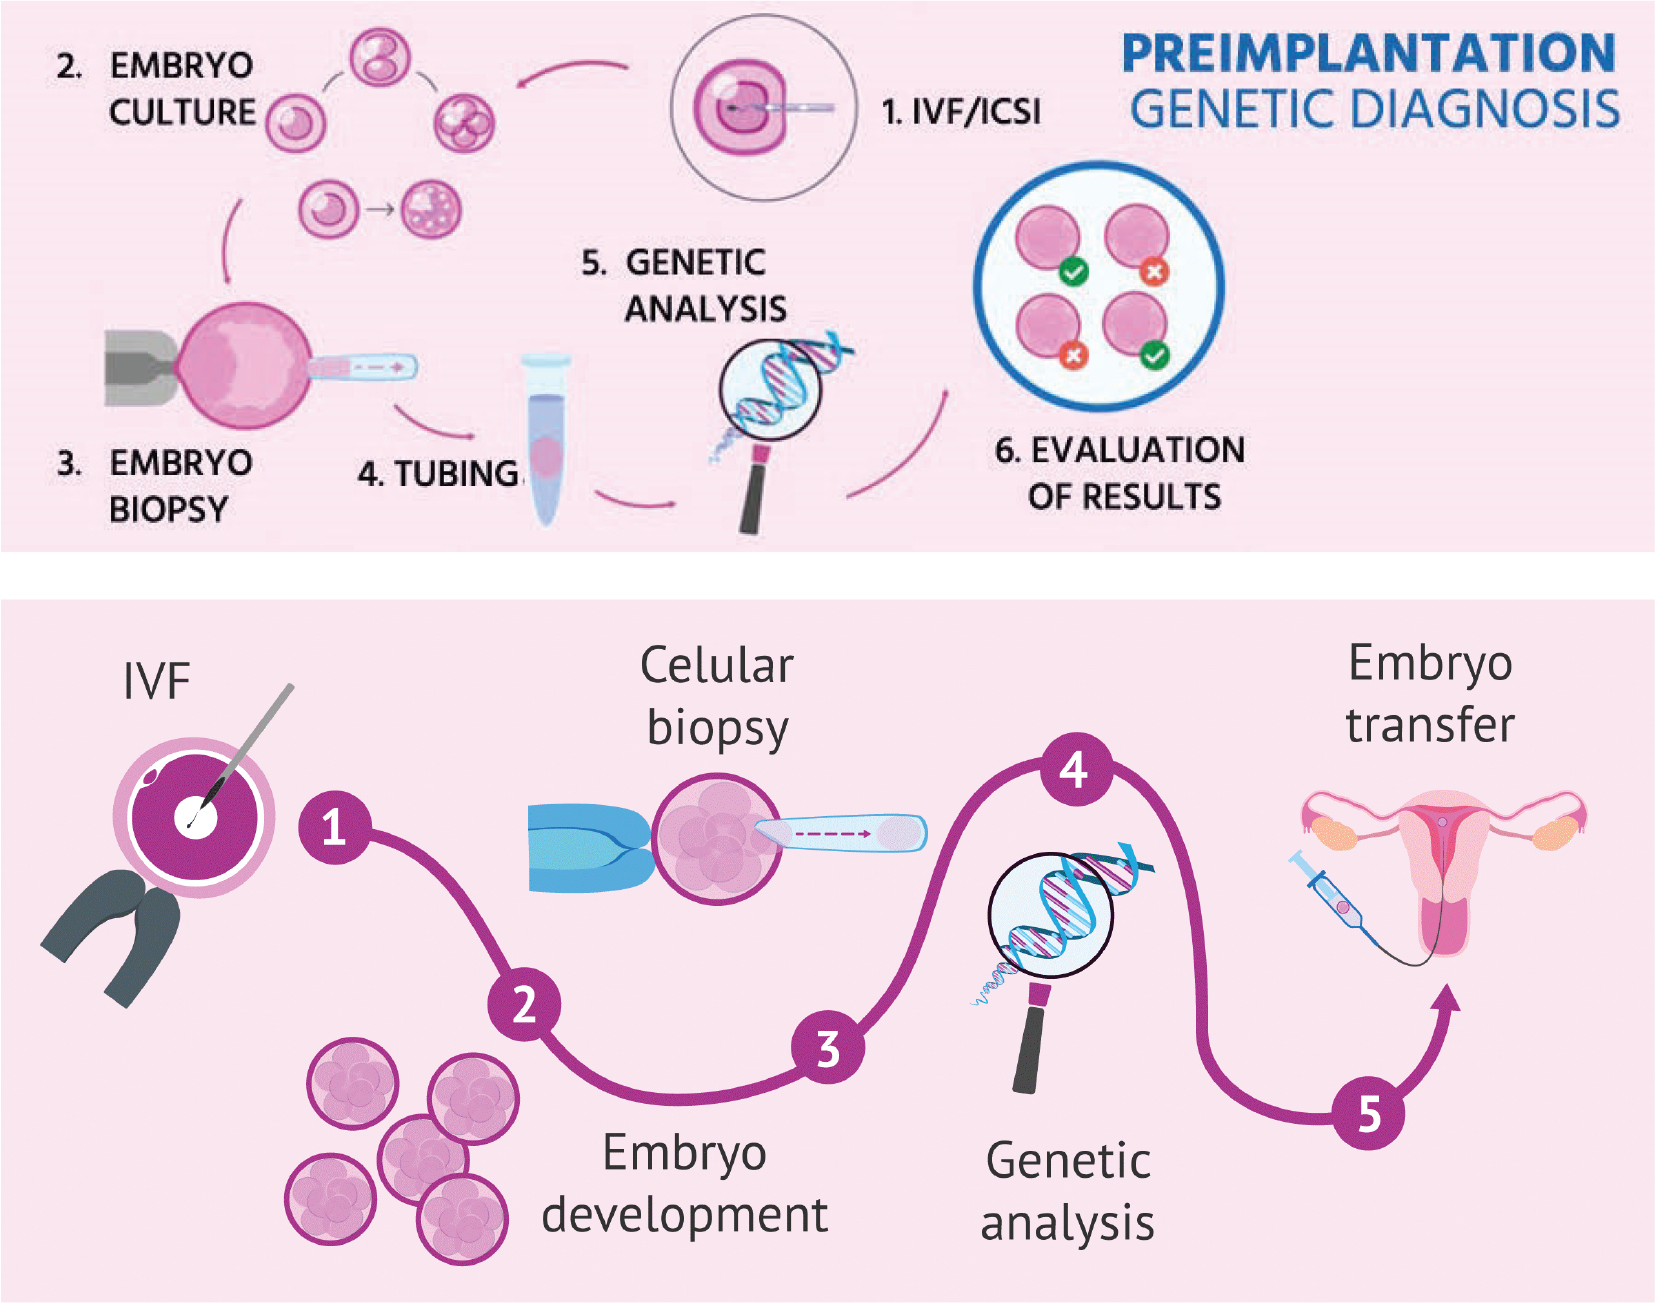 Prenatal diagnosis and preimplantation genetic diagnosis for 